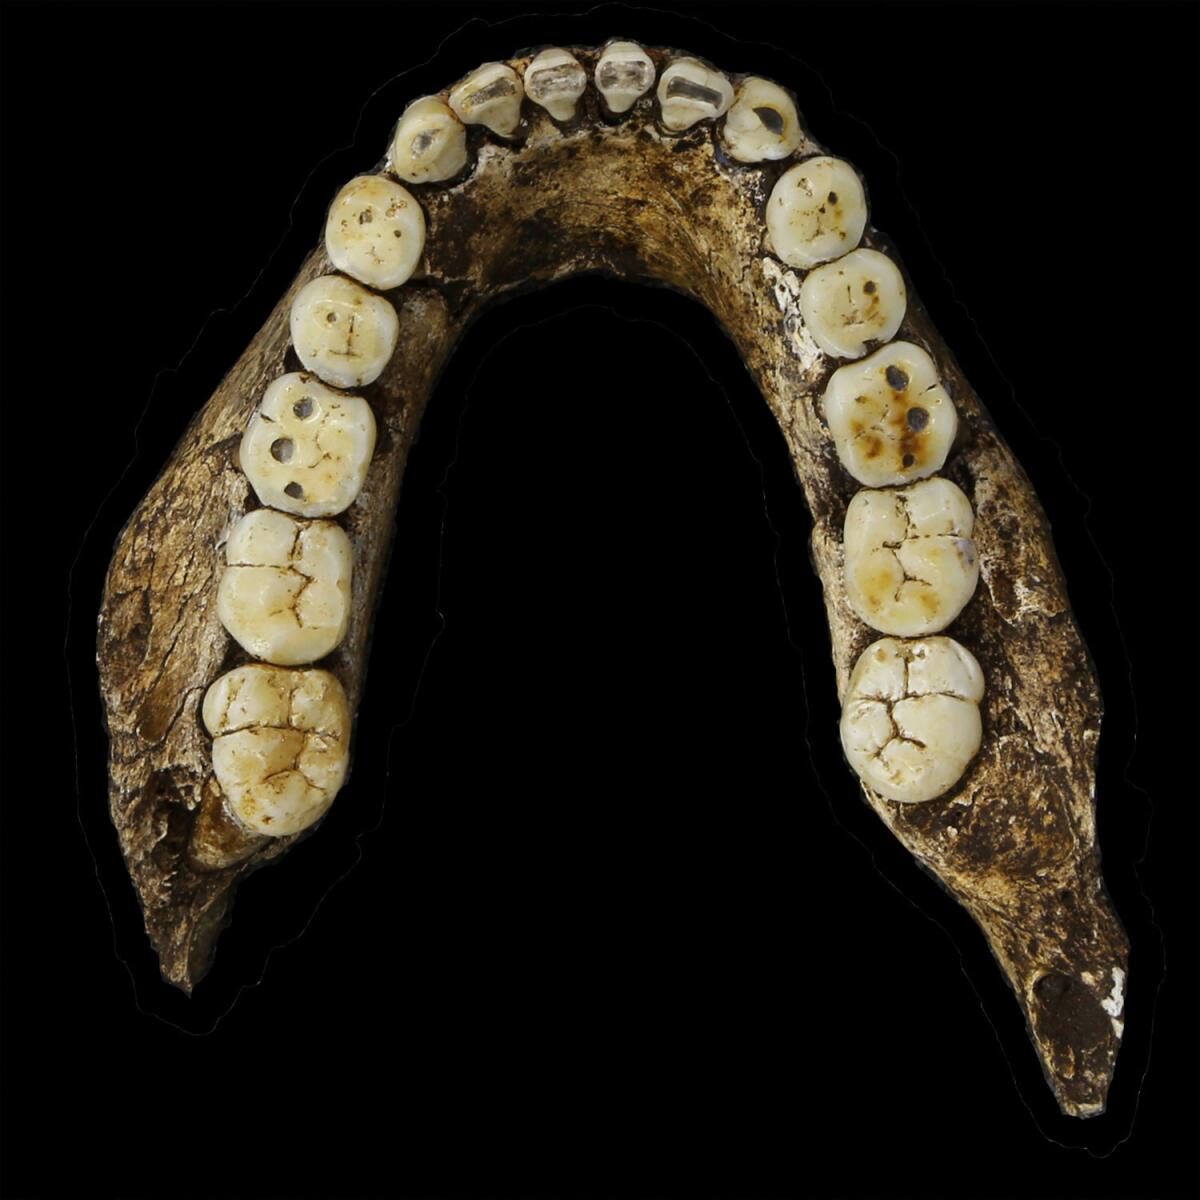 Homo naledi mandible (John Hawks / Wits University)